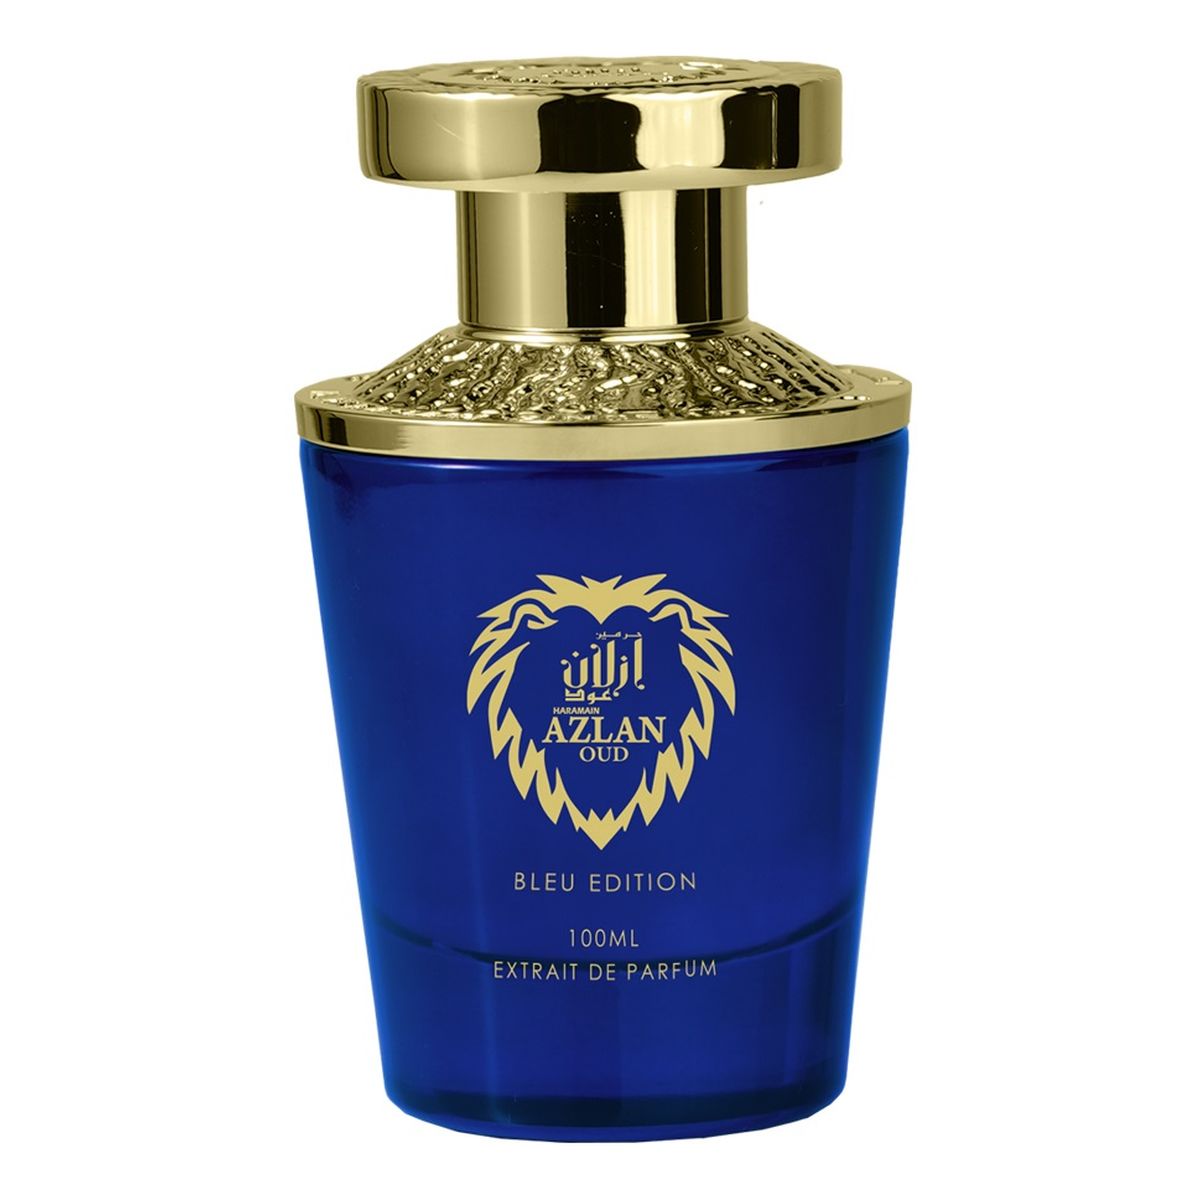 Al Haramain Azlan oud bleu edition ekstrakt perfum spray 100ml